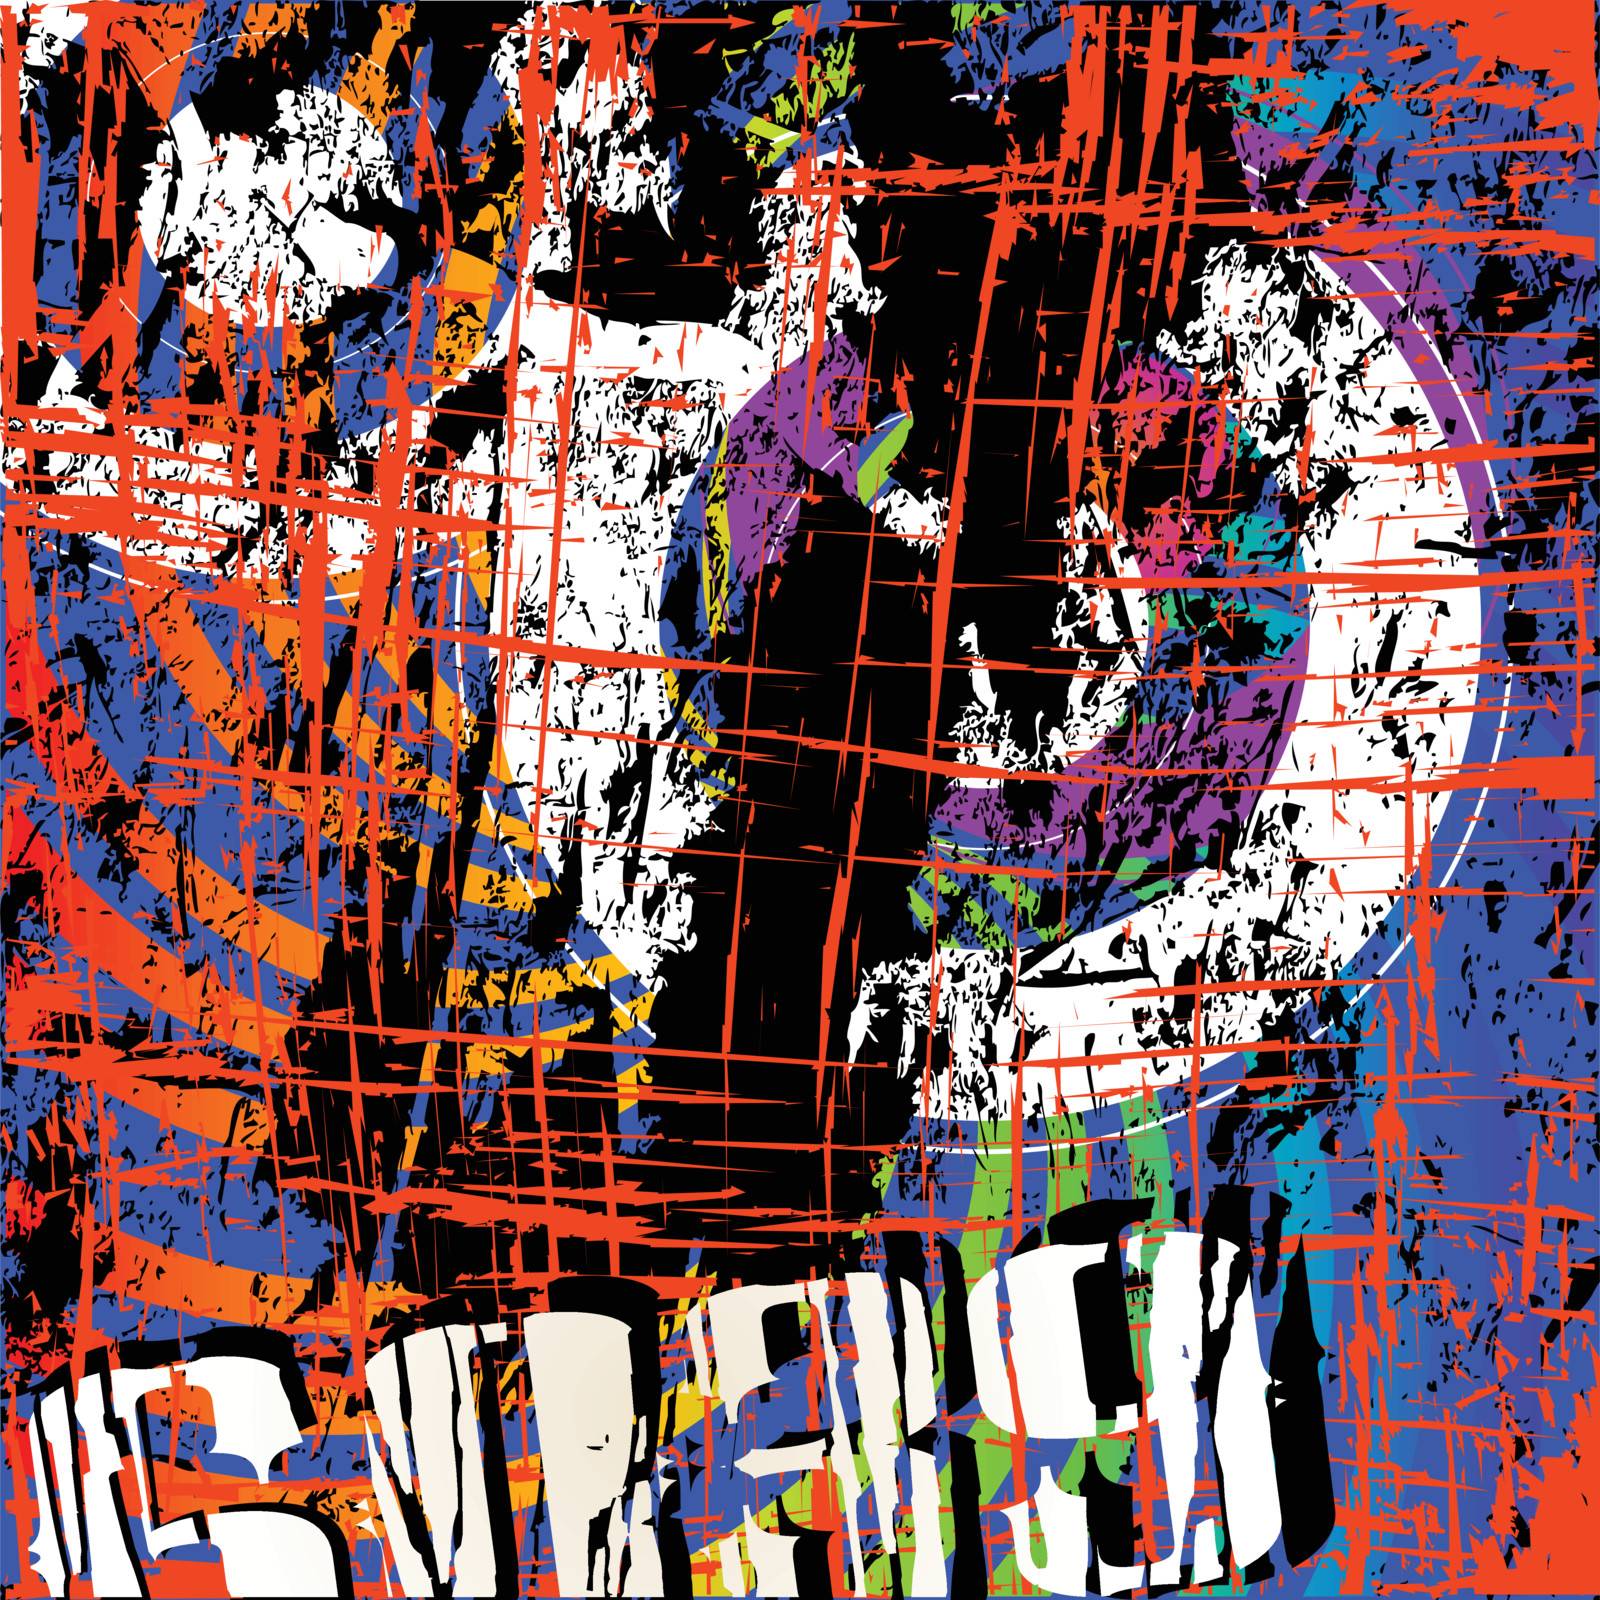 Grunge poster by Lirch